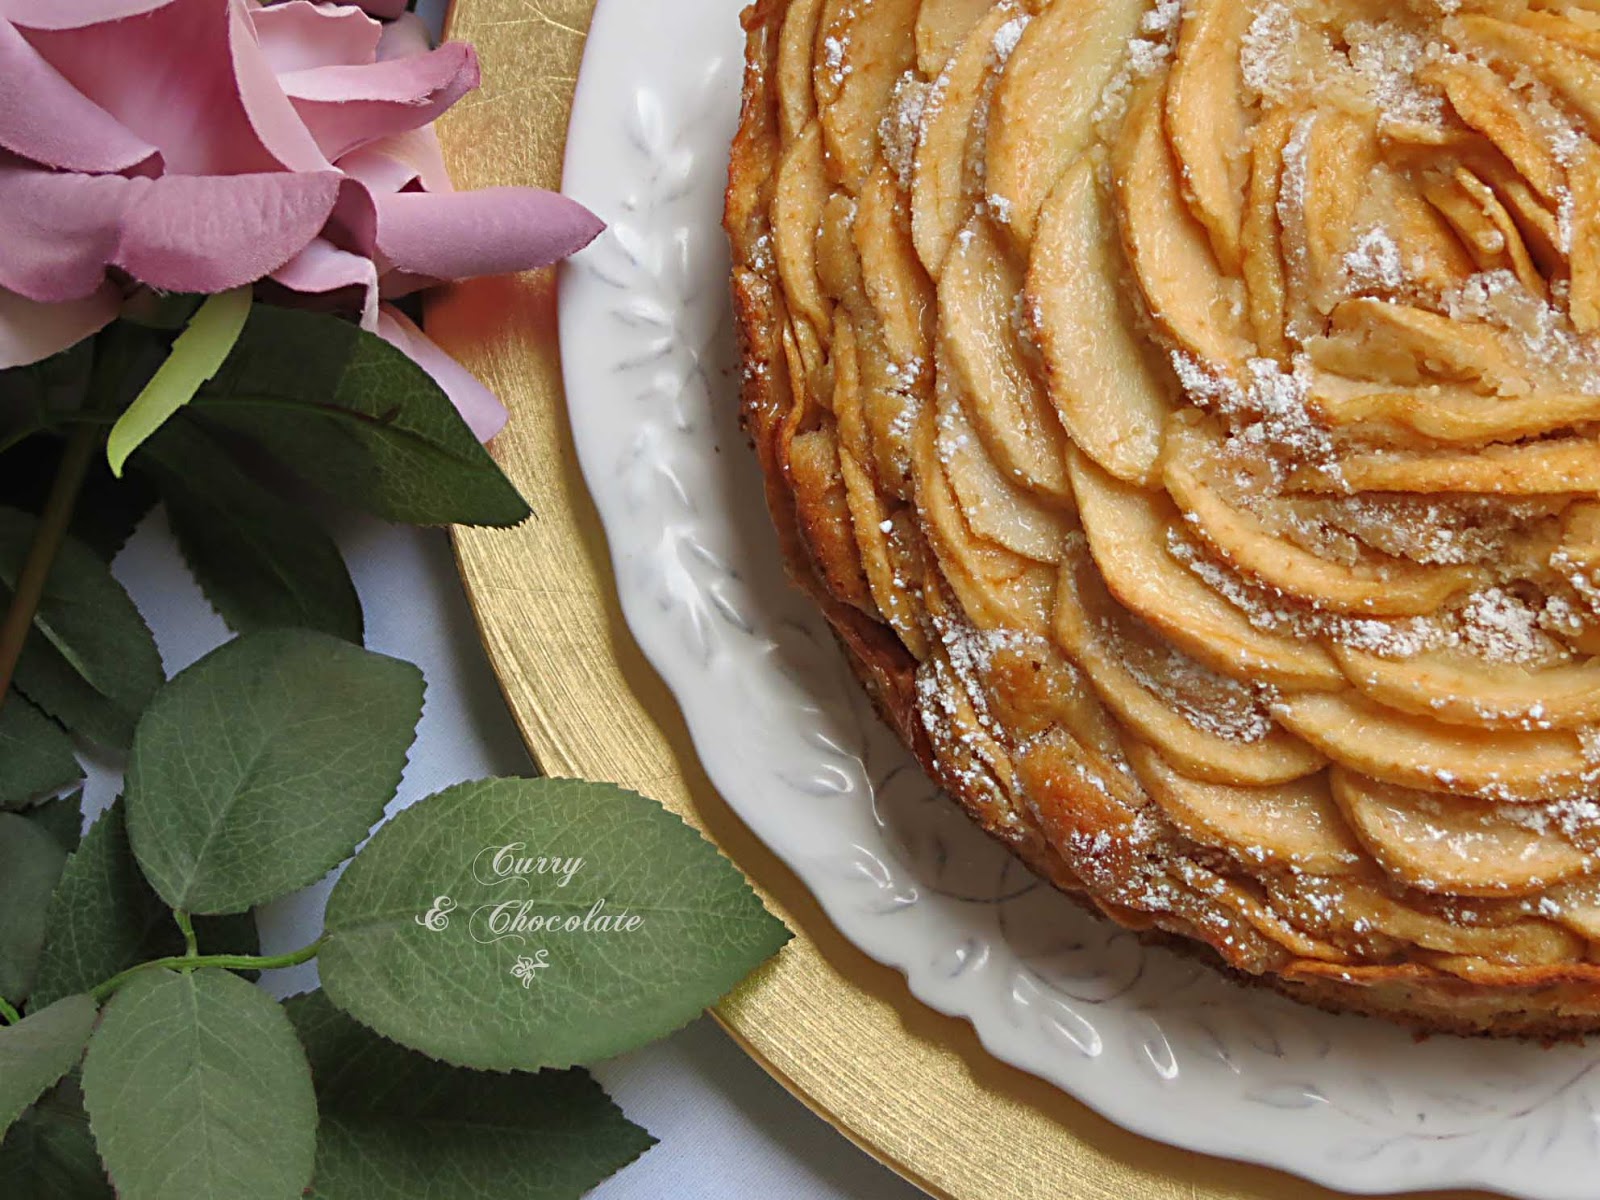 Bizcocho rosa de manzana – Rose apple cake